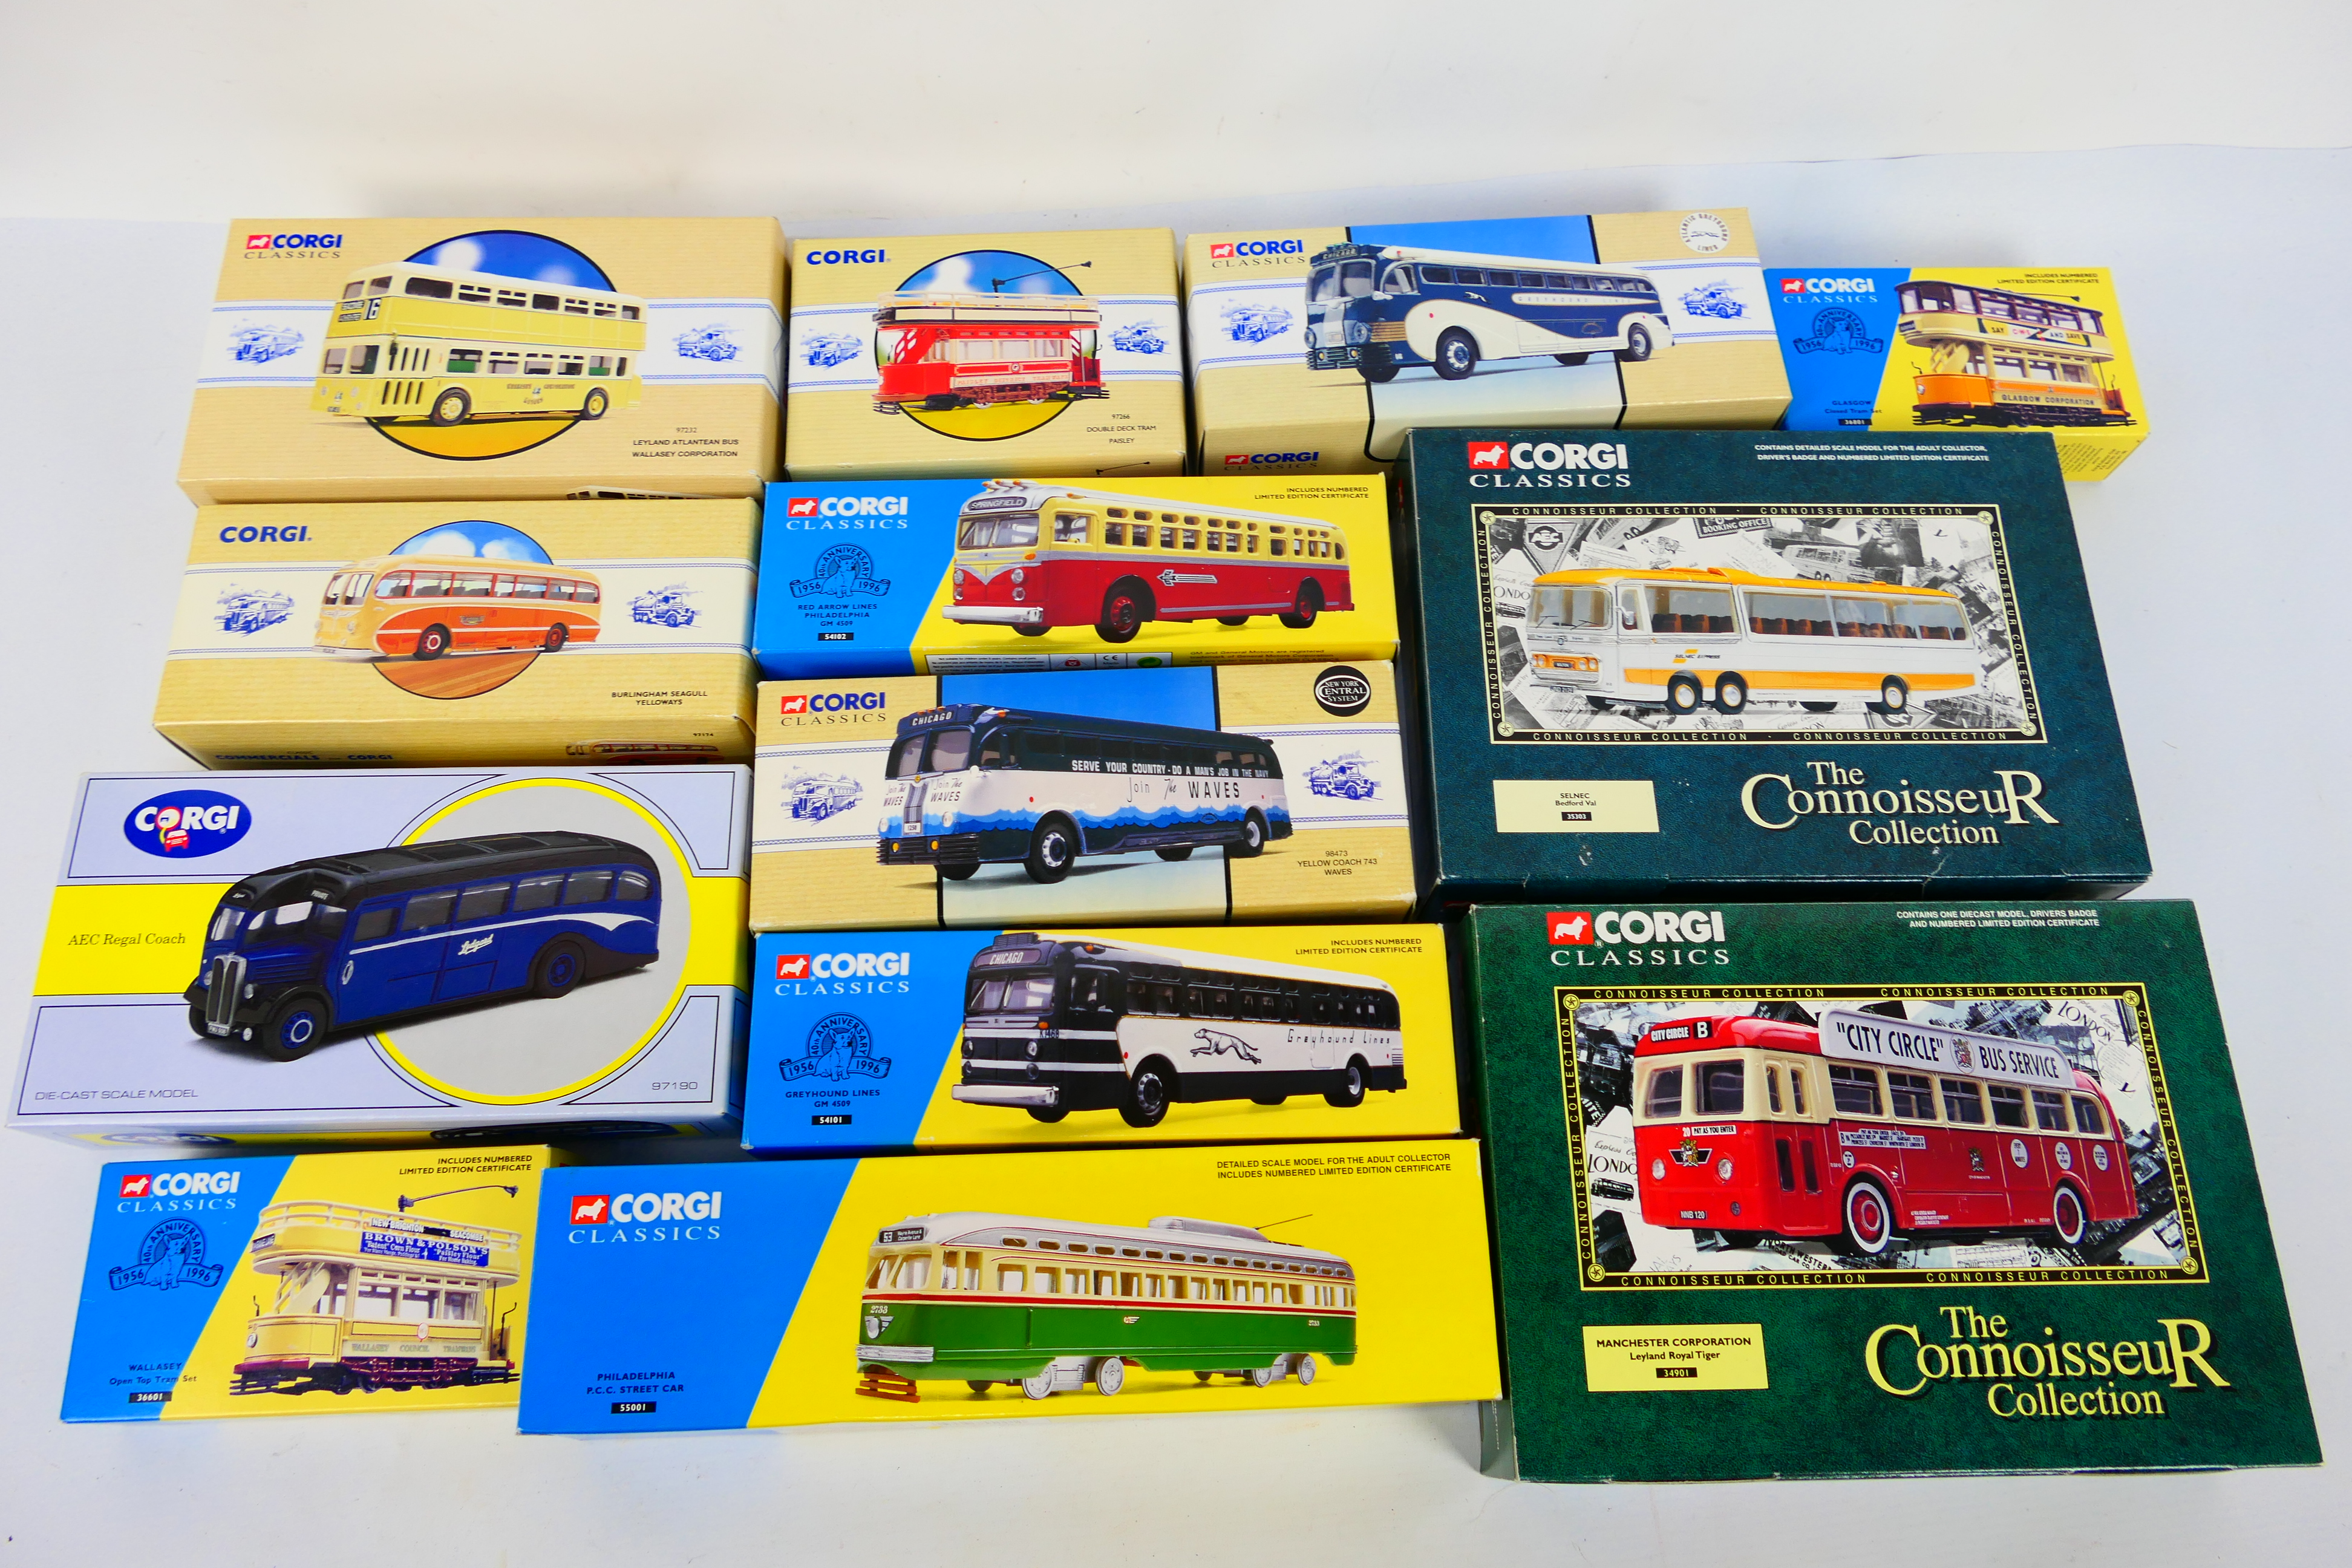 Corgi Classics - 13 boxed diecast model buses and trams from various Corgi ranges,